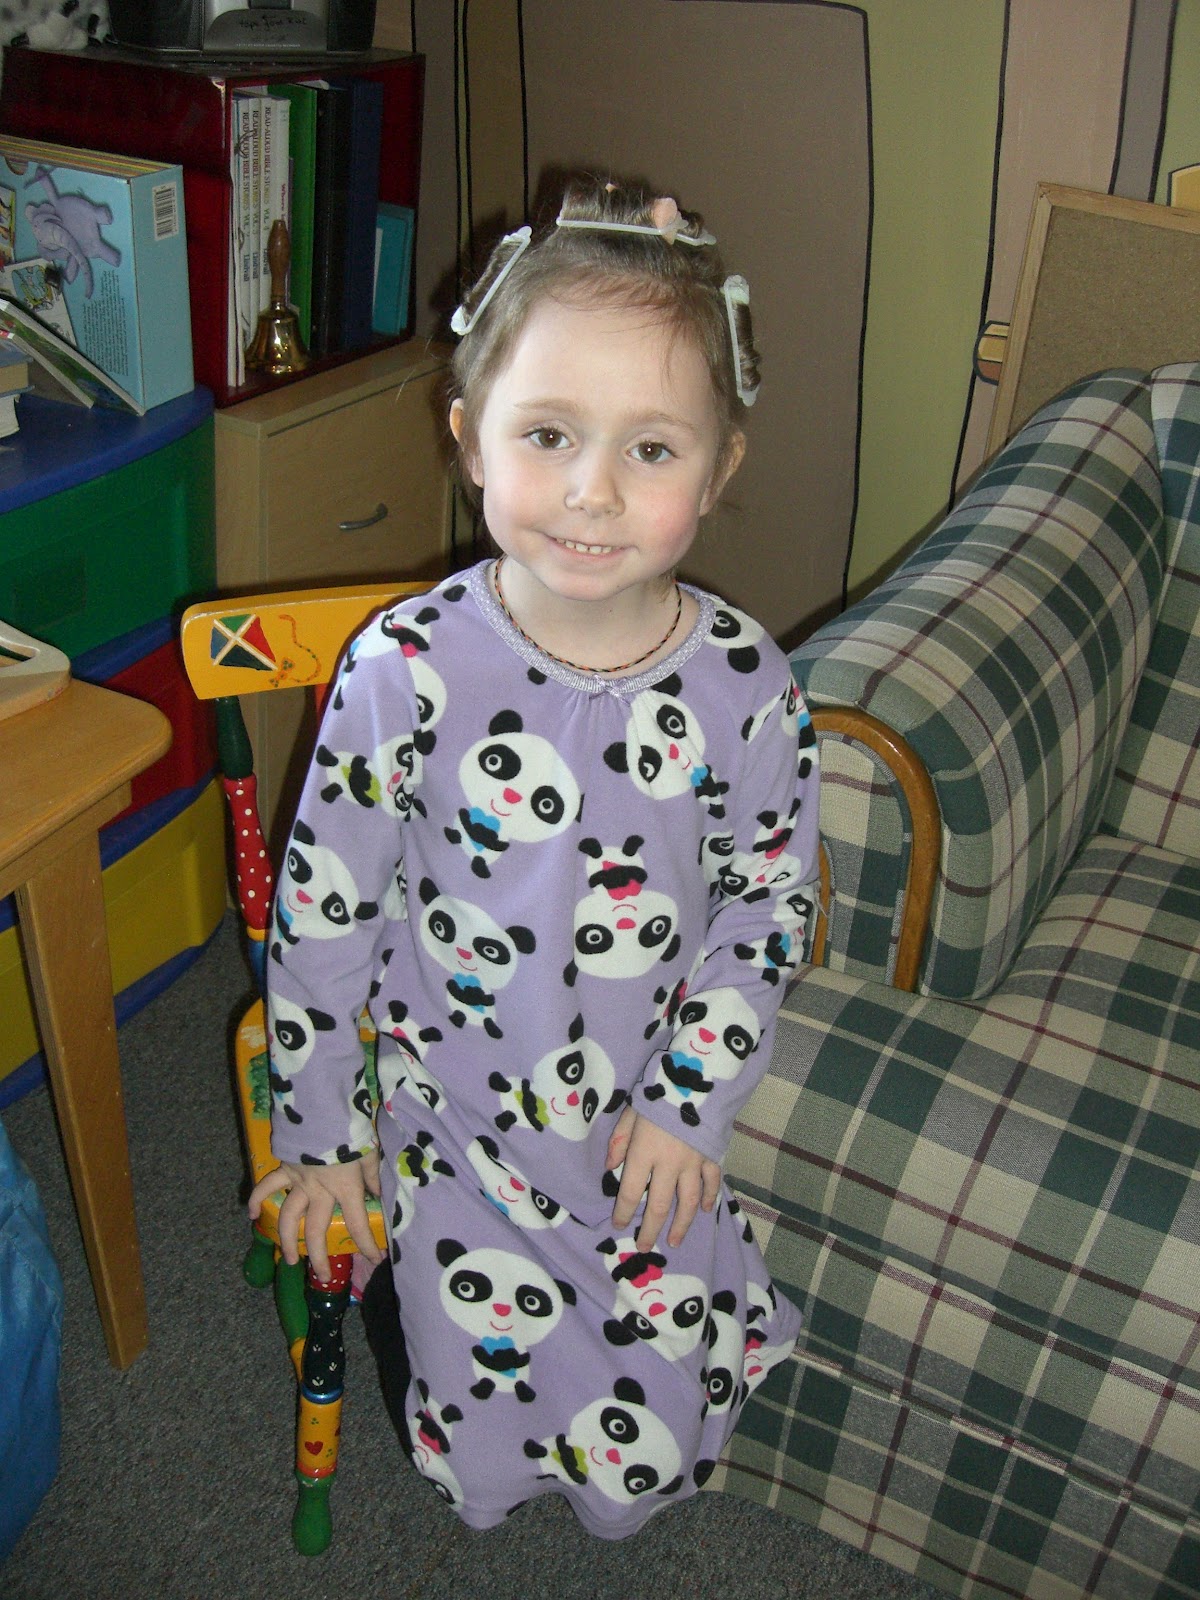 Country Kids Christian Preschool: Pajama Day!